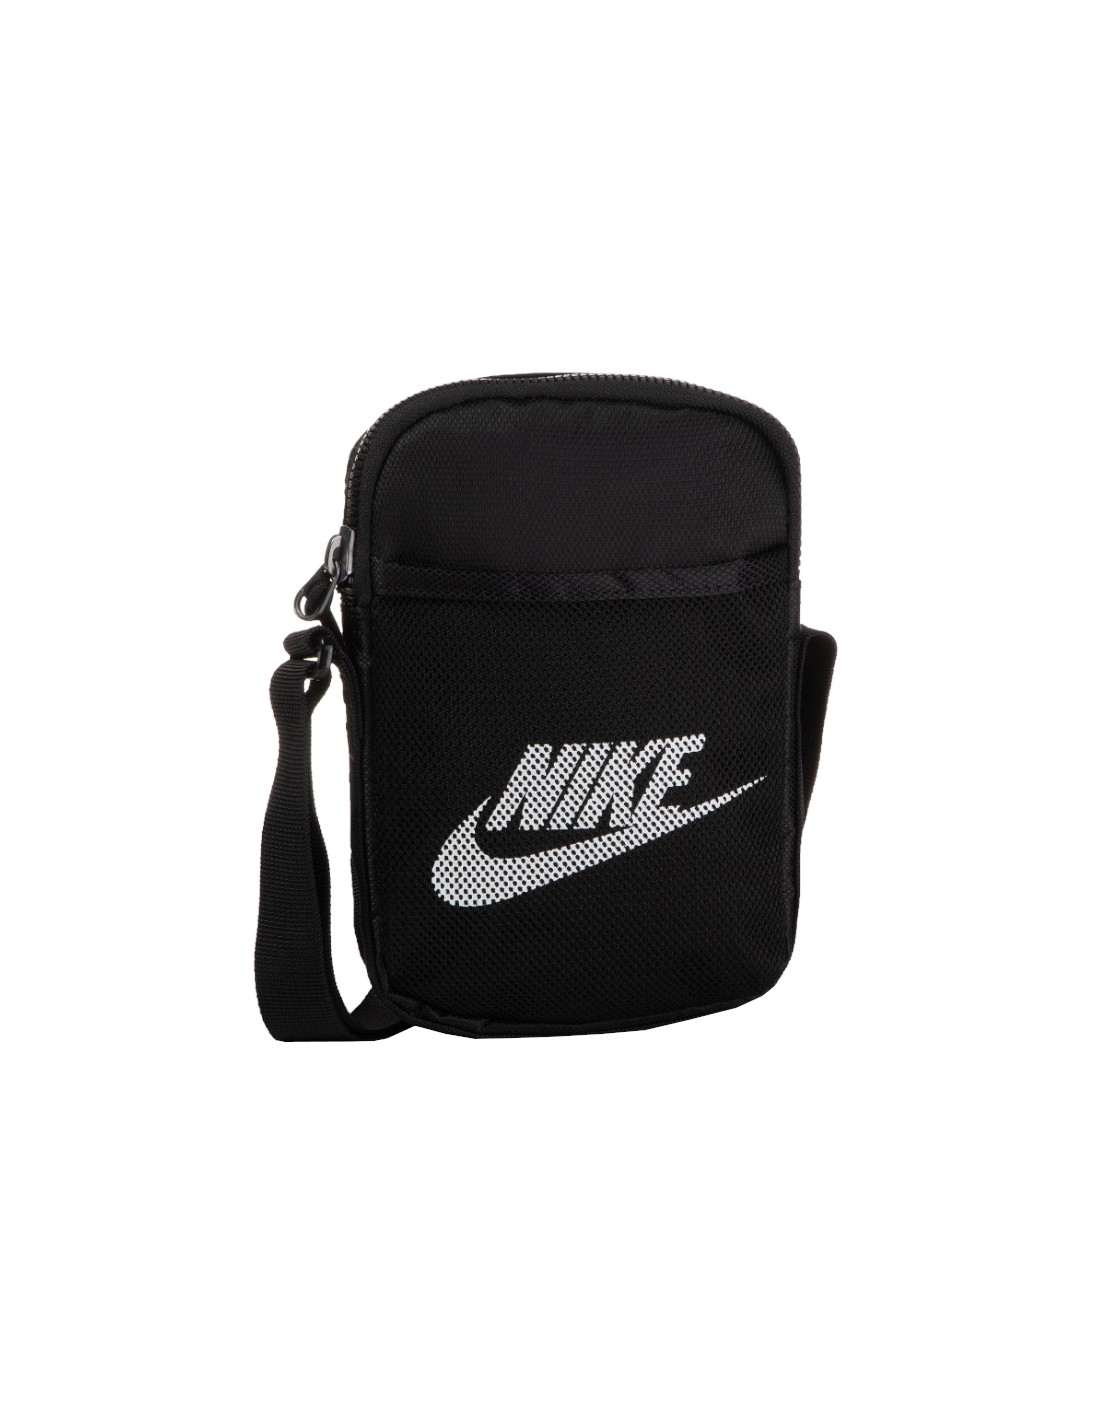 Nike Heritage S Smit Small Items Bag BA5871010